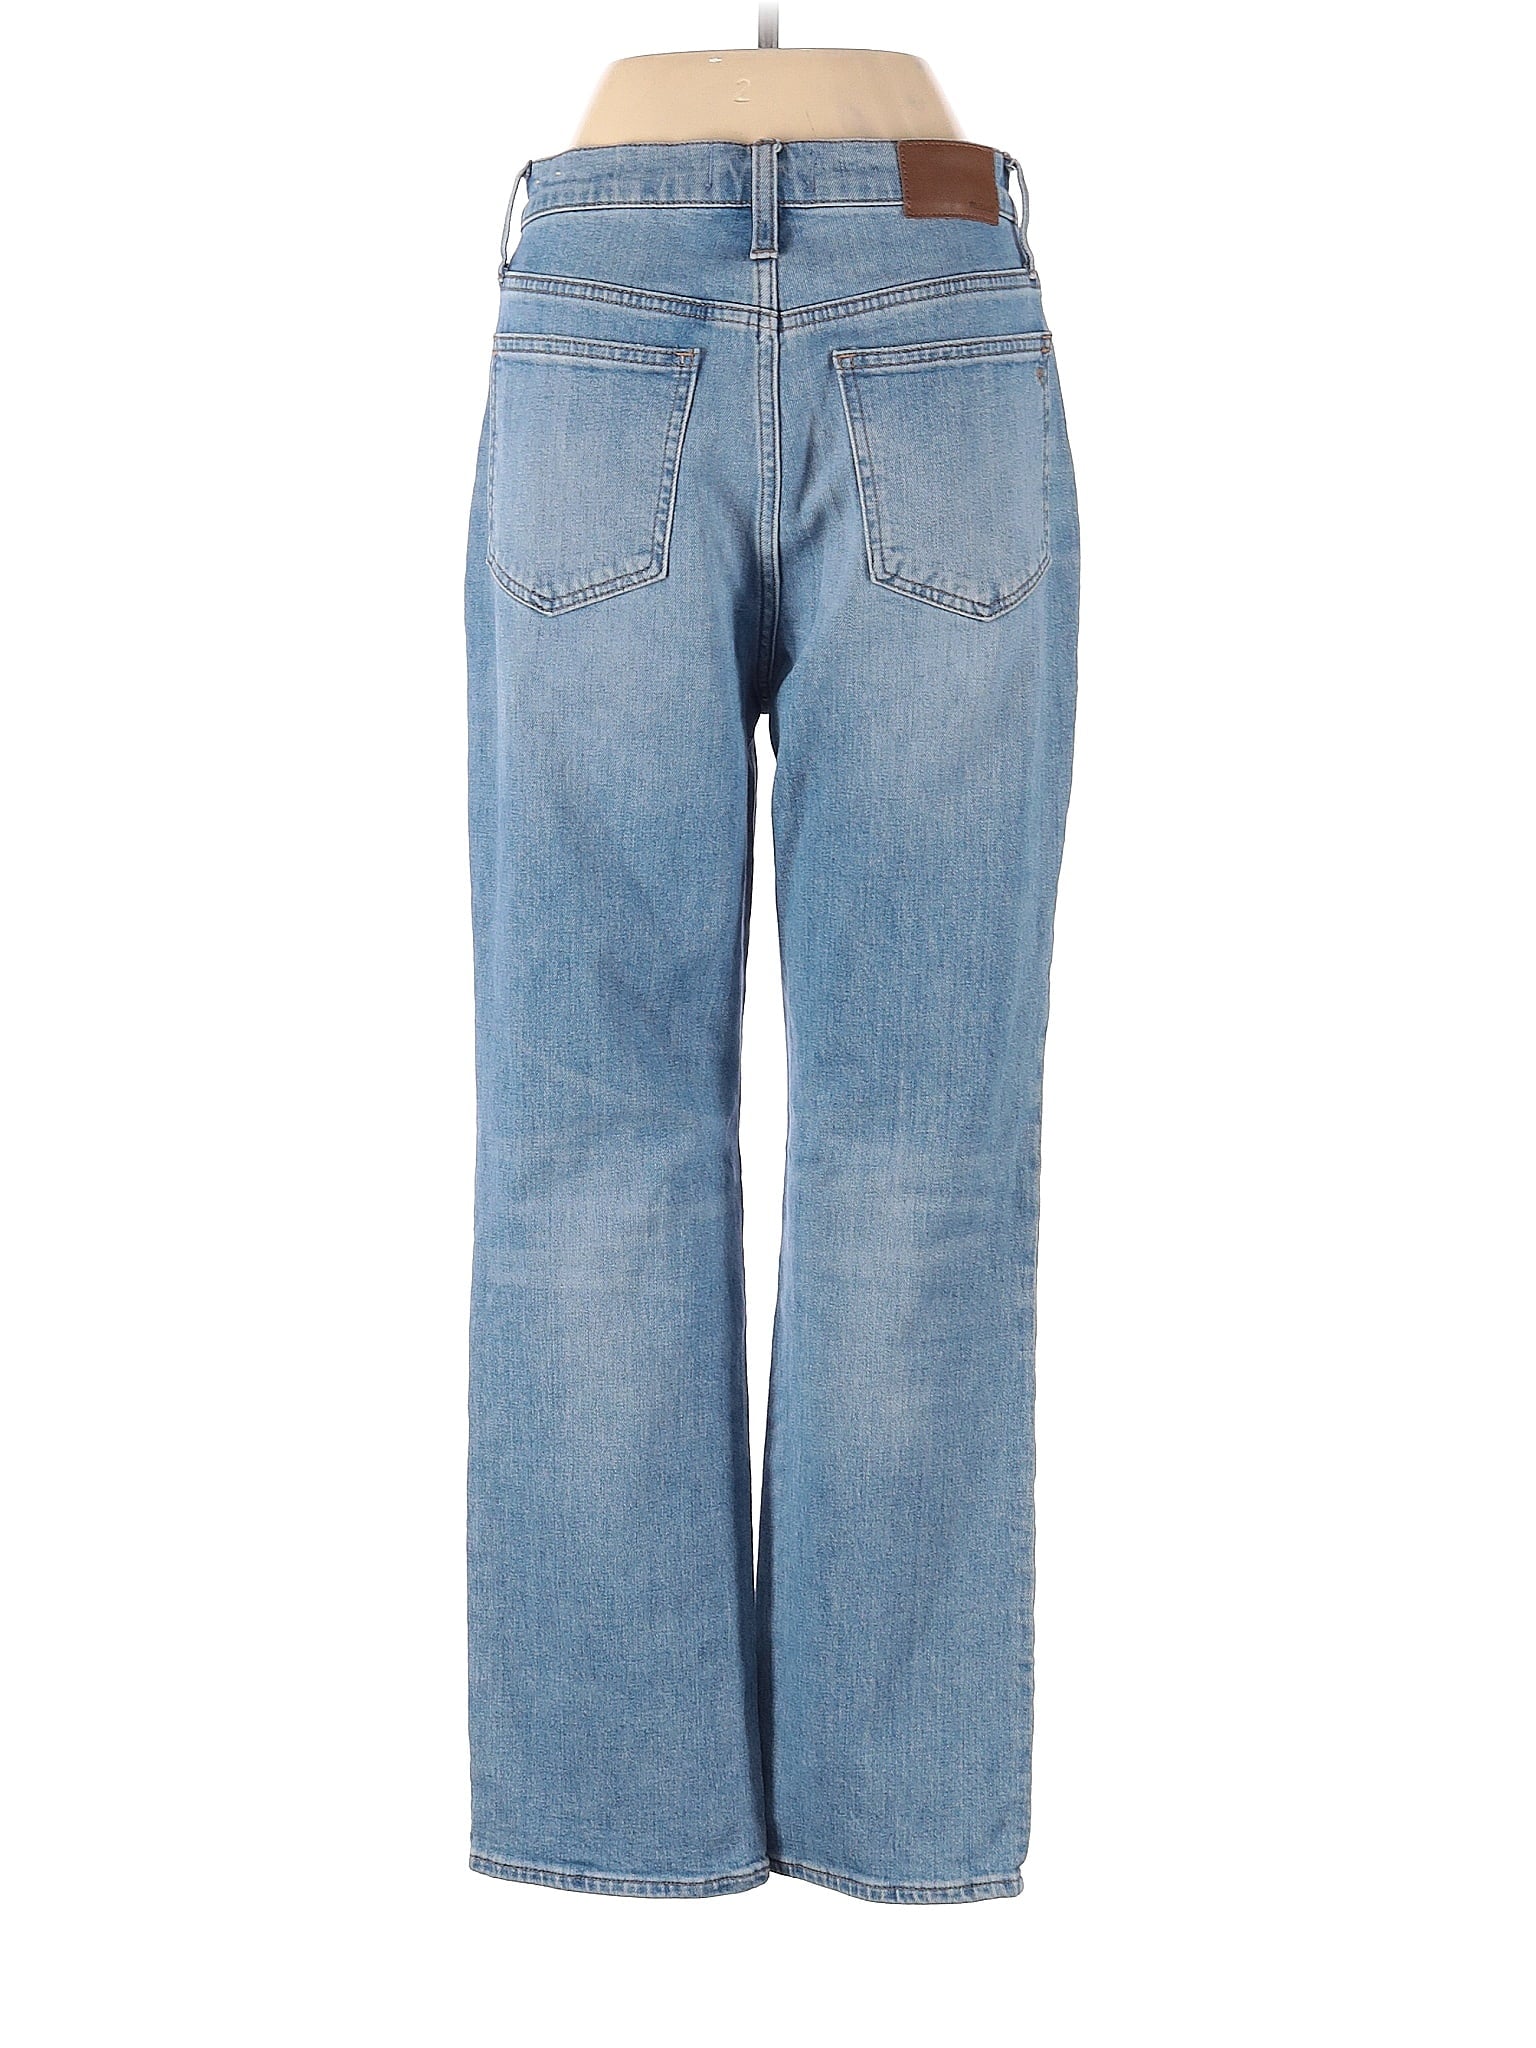 High-Rise Boyjeans Slim Demi-Boot Jeans In Denis Wash in Medium Wash waist size - 26